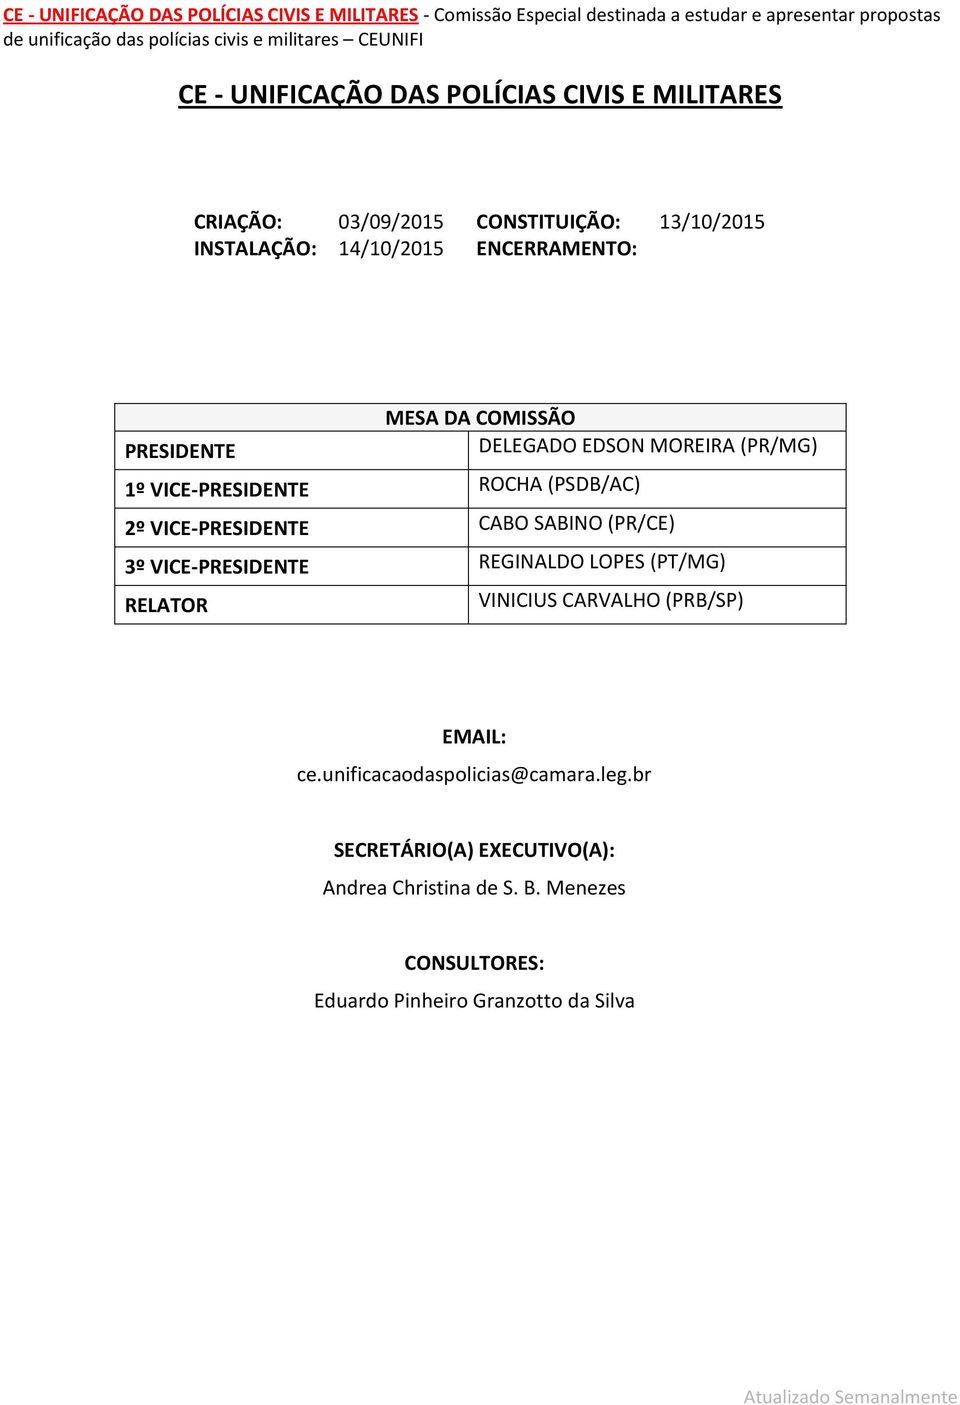 VICE-PRESIDENTE CABO SABINO (PR/CE) 3º VICE-PRESIDENTE REGINALDO LOPES (PT/MG) RELATOR VINICIUS CARVALHO (PRB/SP) EMAIL: ce.